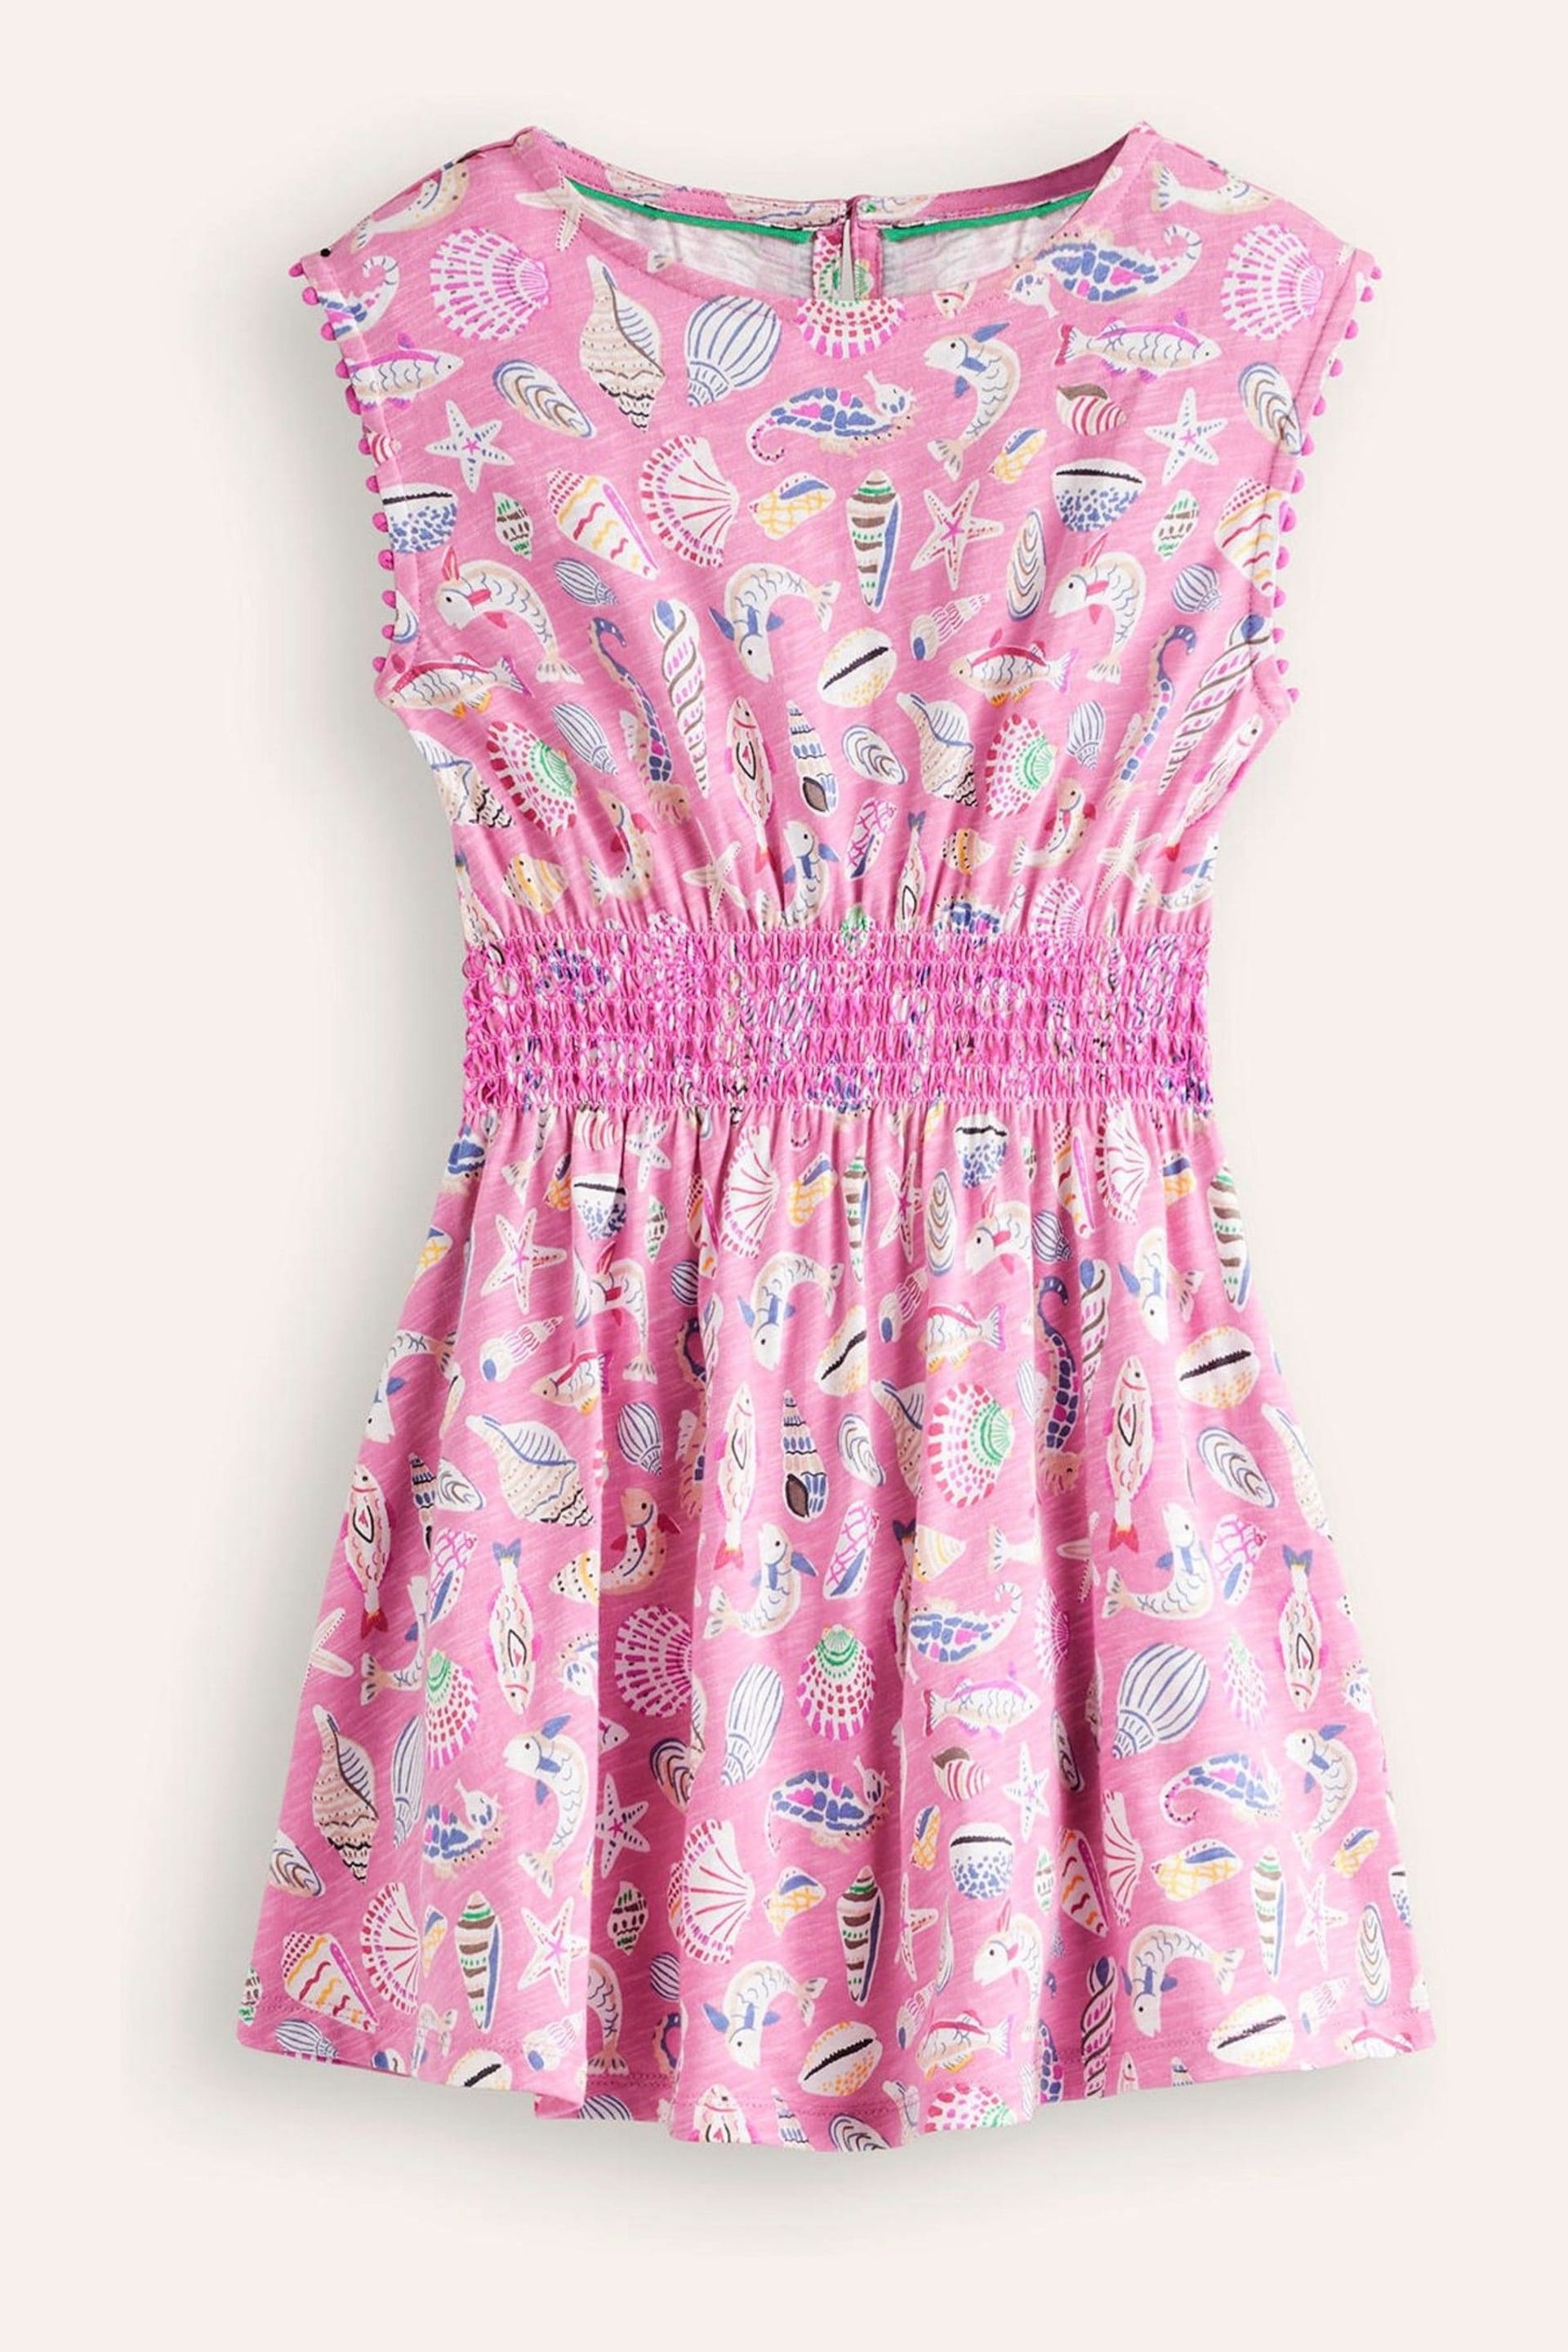 Boden Pink Seashore Shirred Waist Jersey Dress - Image 2 of 4